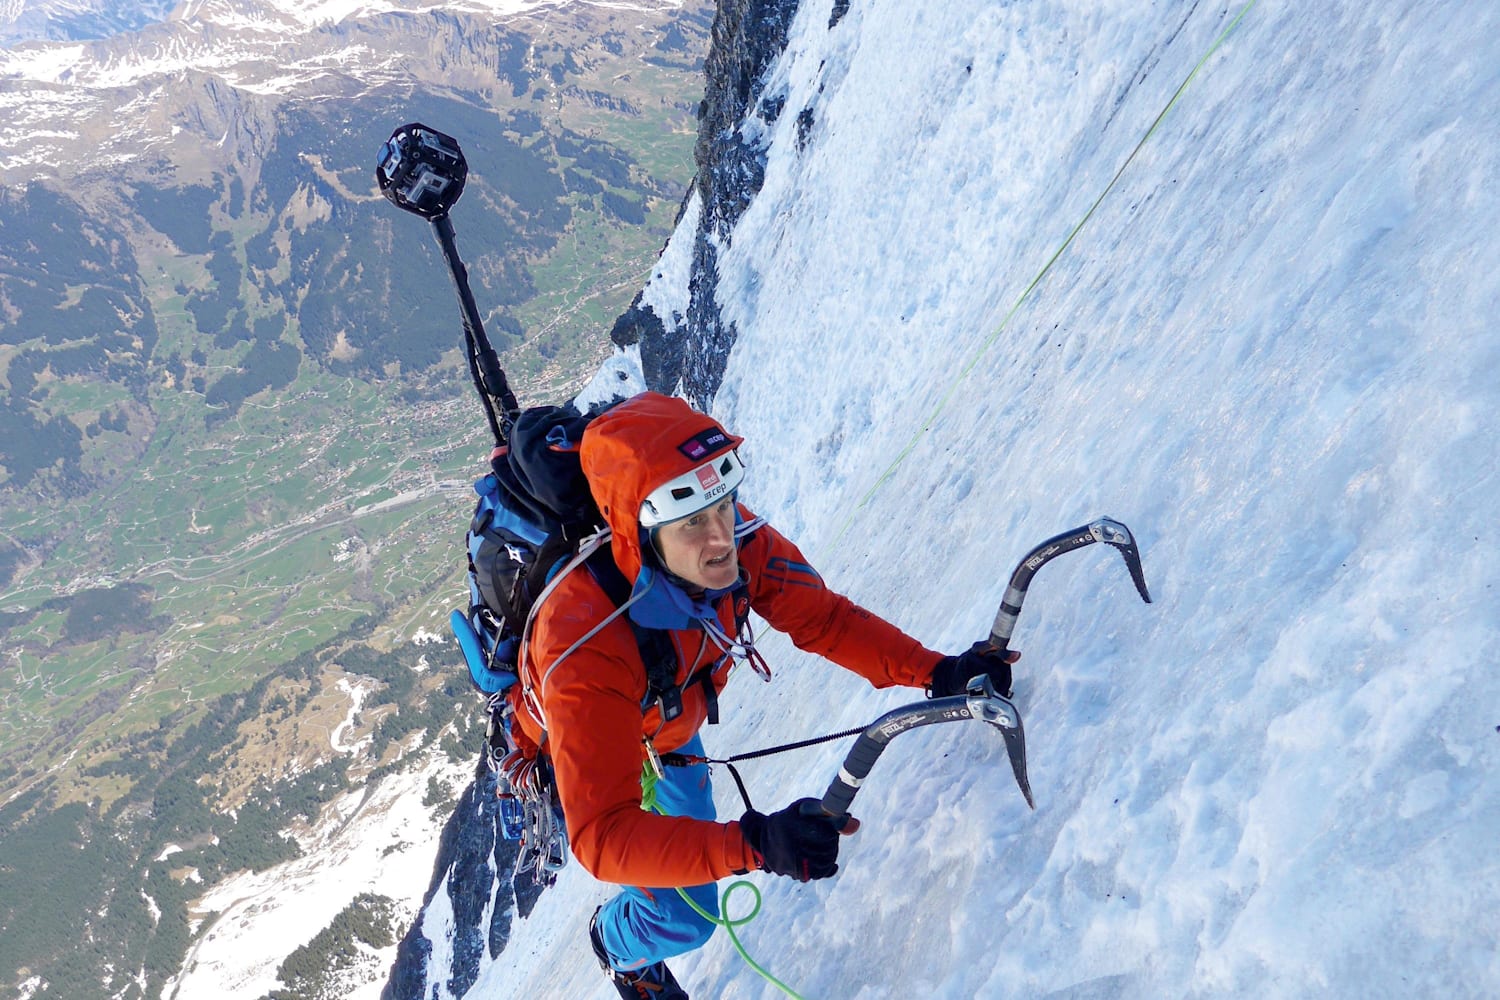 360 degree video of climbers summiting 